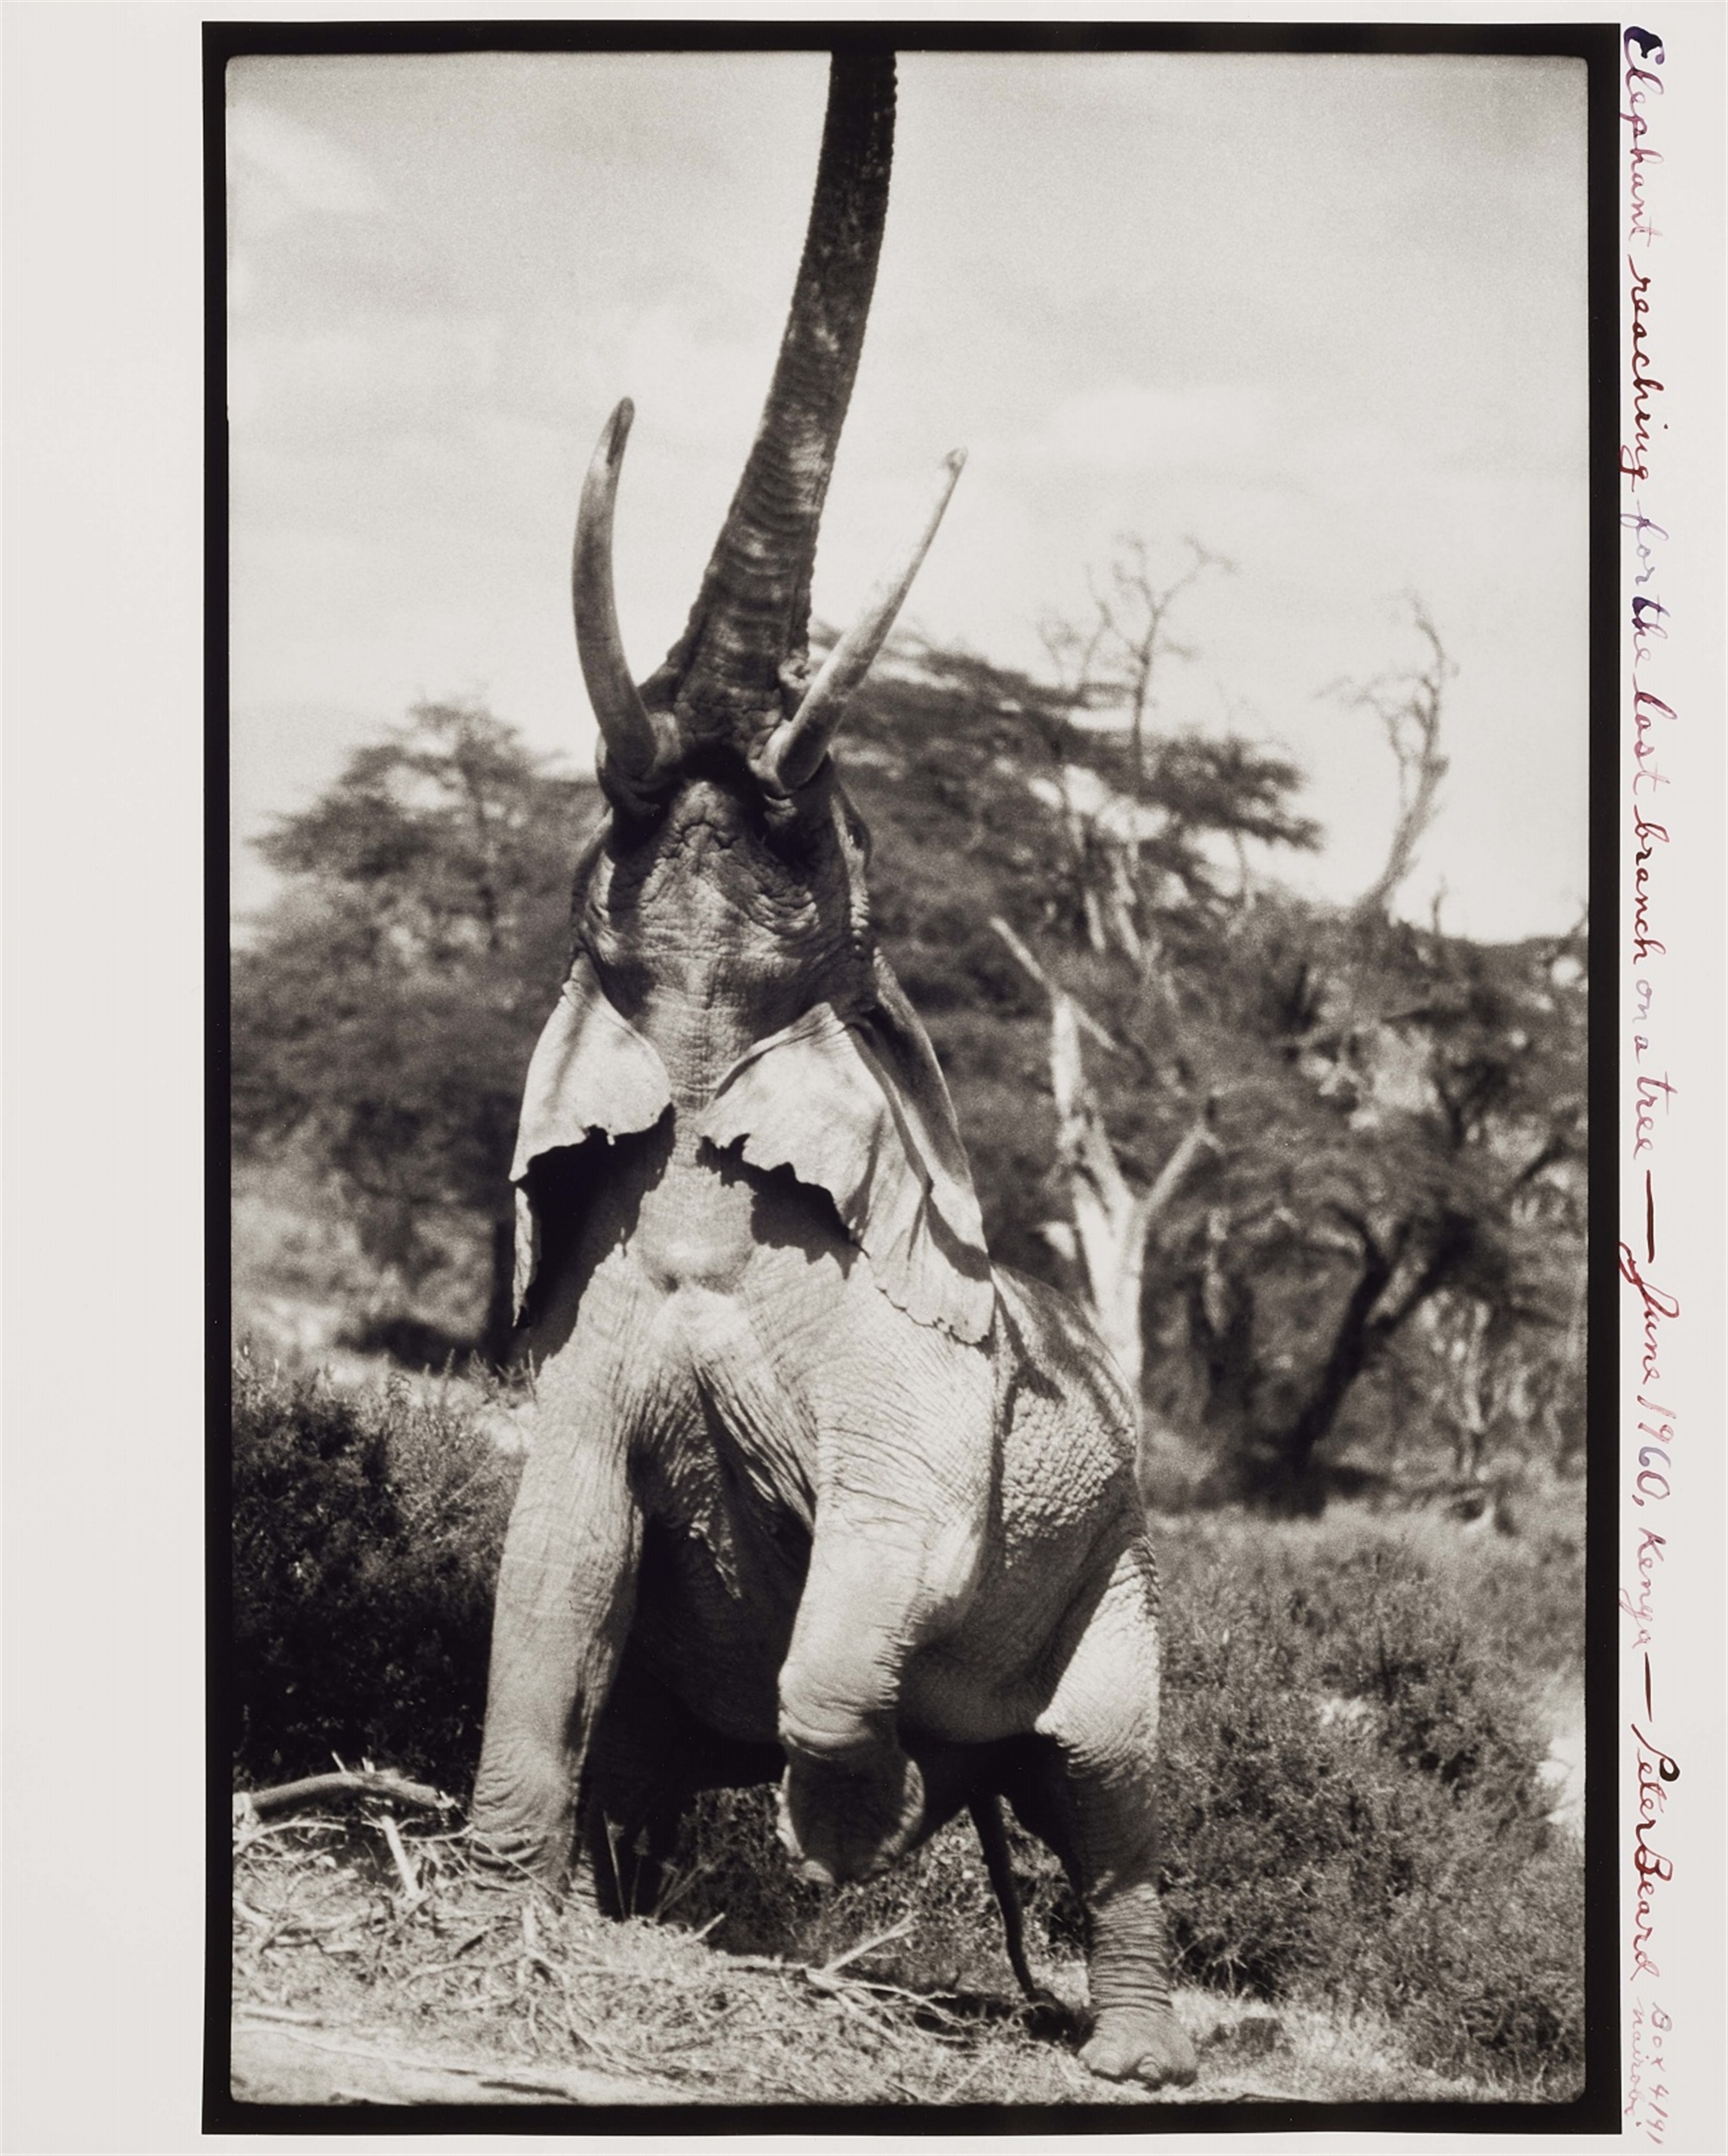 Peter Beard, Elephant reaching for the last Branch on a Tree, Kenya (R)